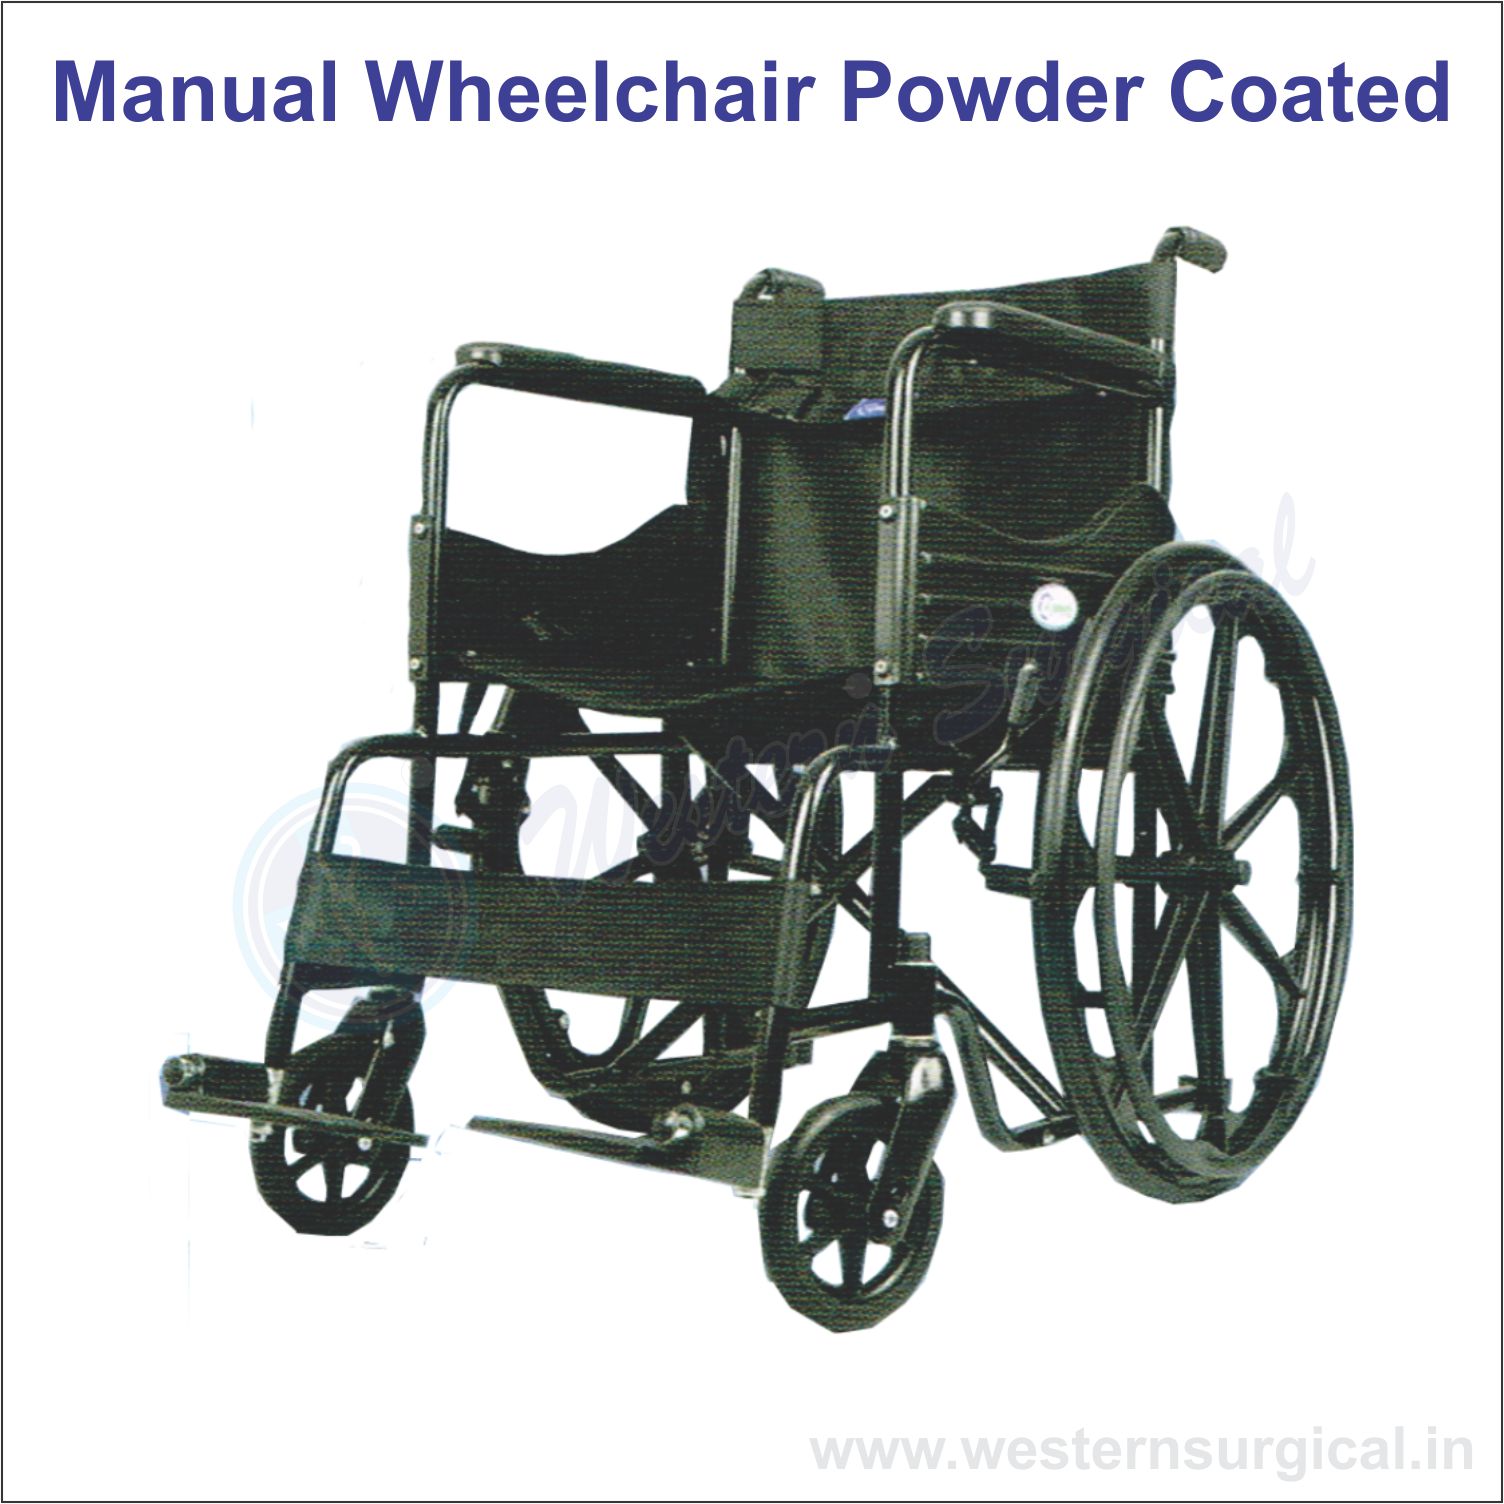 Manual Wheelchair - Powder Coated 